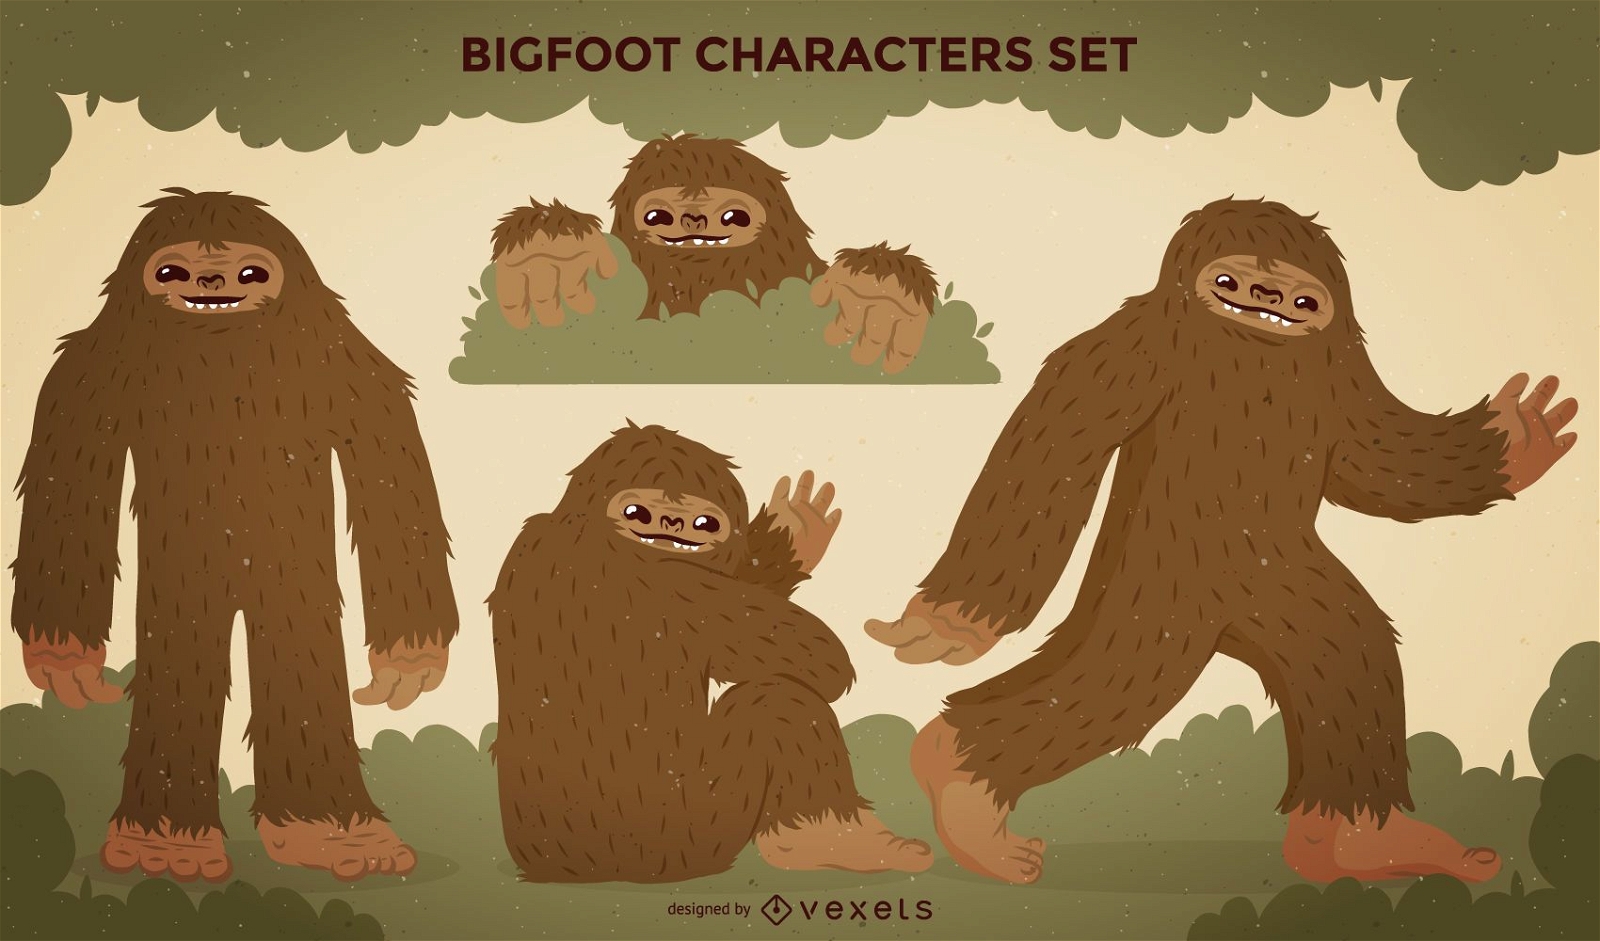 Bigfoot characters illustration set